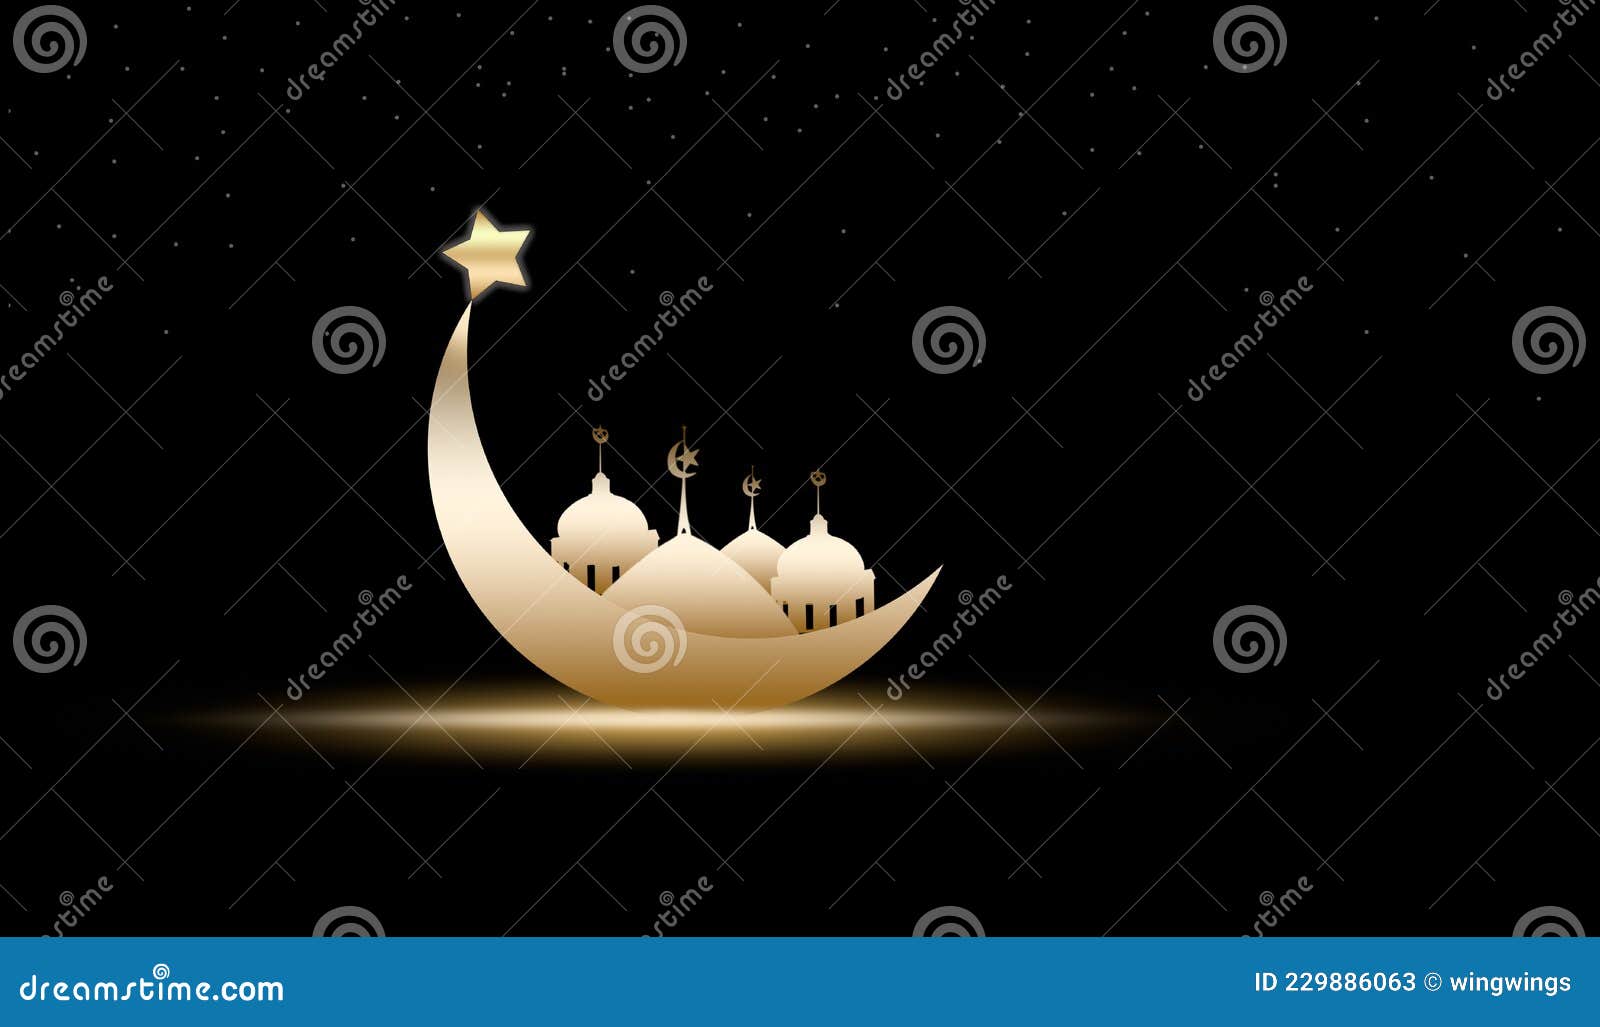 crescent moon and star with mosques dome on black background. for eid al-fitr, arabic, eid al-adha, new year muharram. ramadan